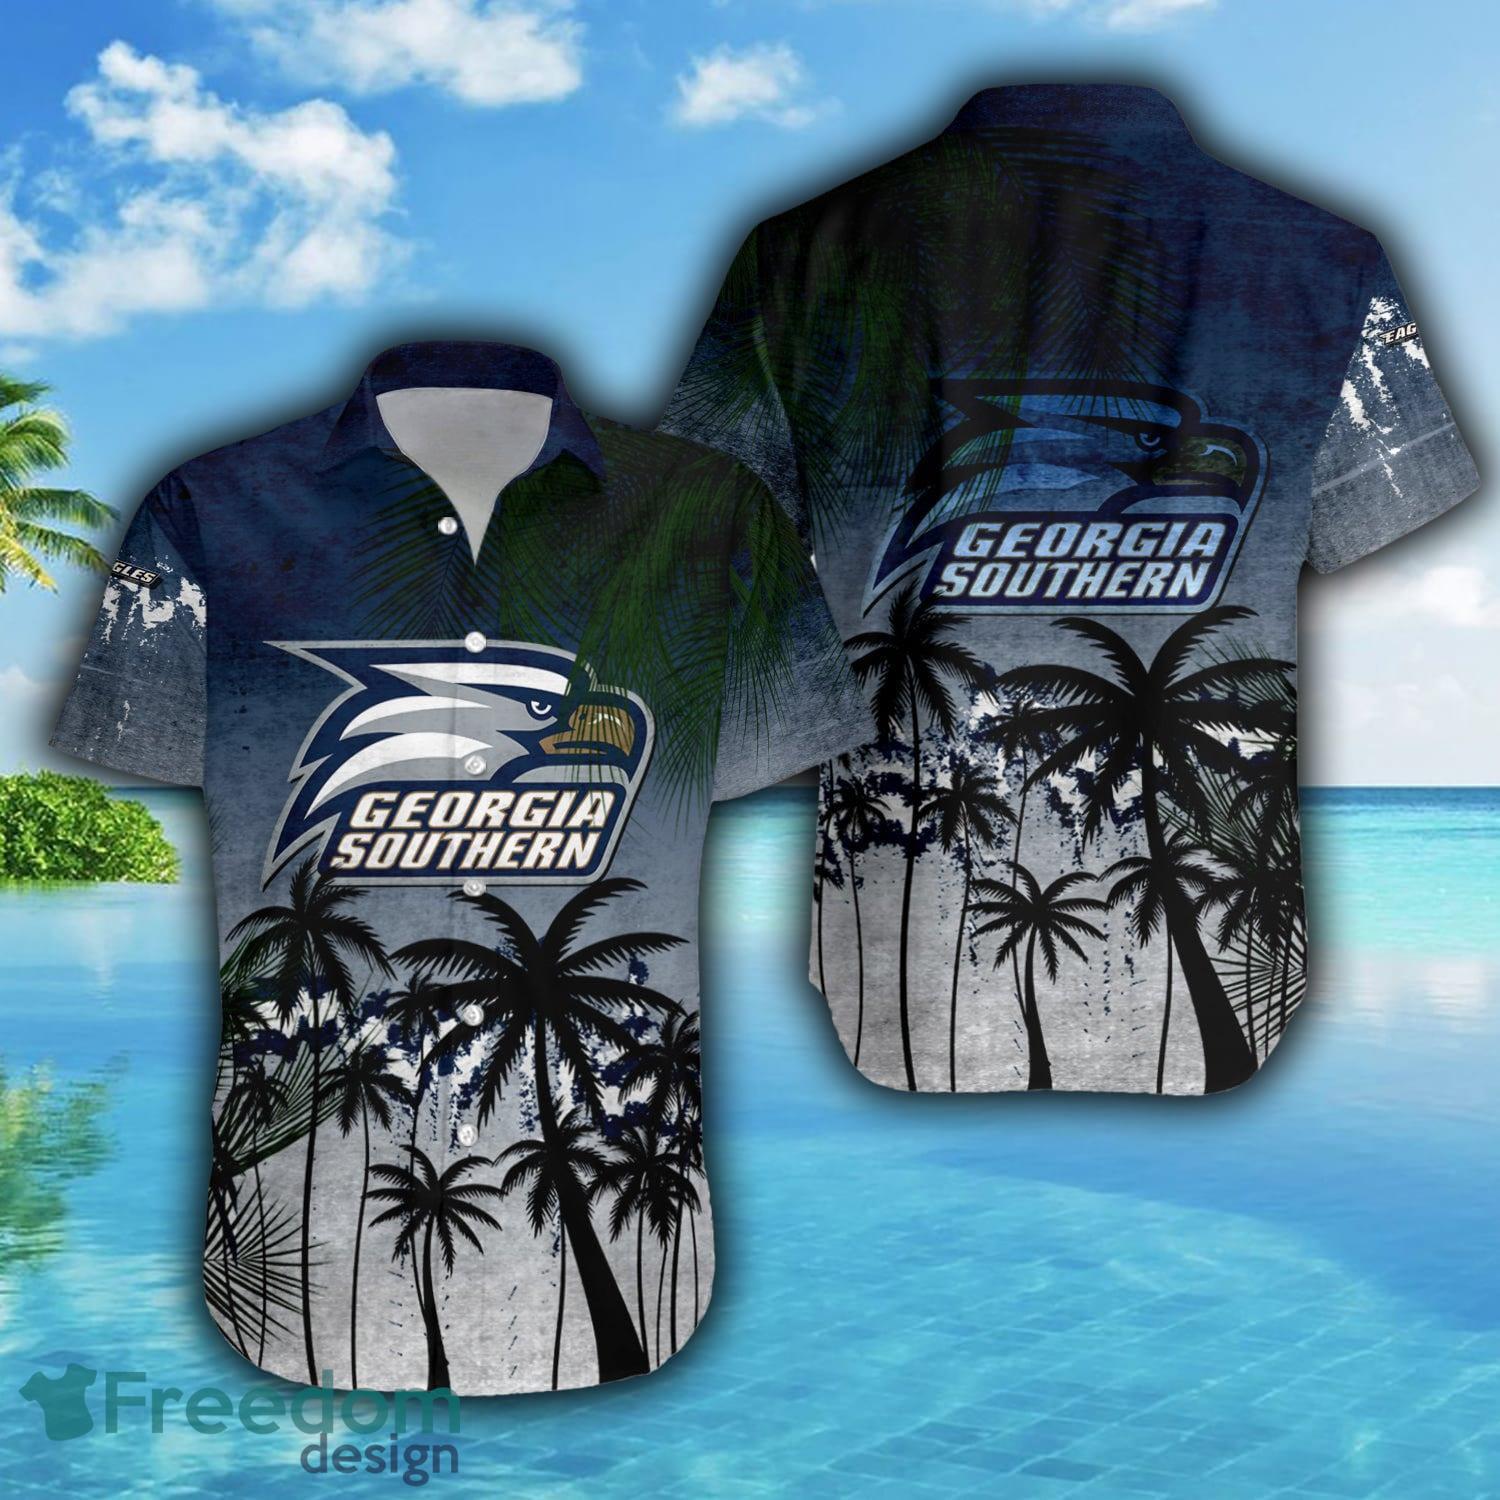 Philadelphia Eagles 3D Hawaiian Shirt And Shorts For Men And Women Gift  Fans - Banantees